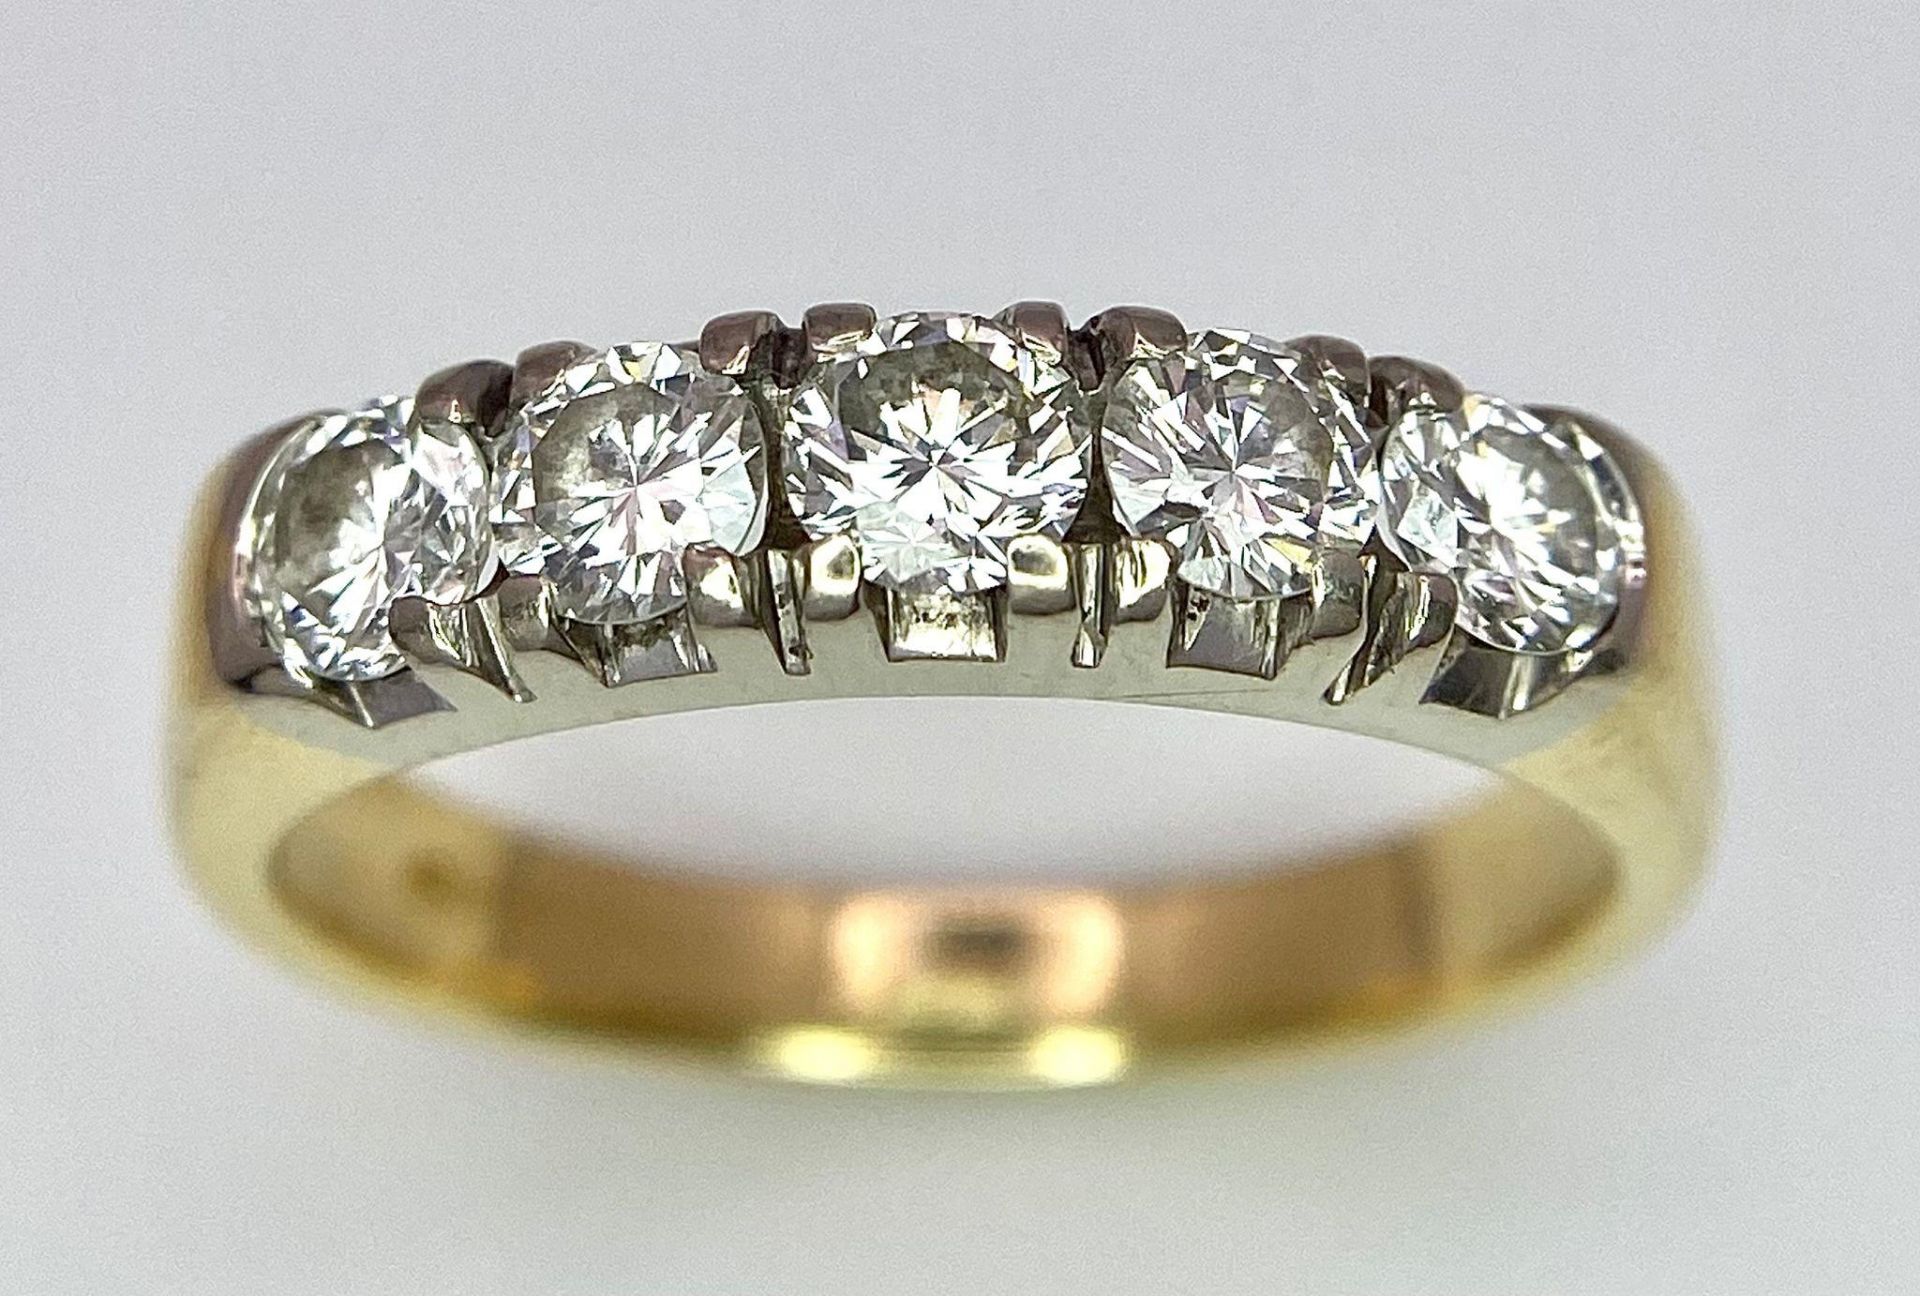 An 18K Yellow Gold Five Stone Diamond Ring. 0.85ctw of brilliant round cut diamonds. Size L. 3.6g - Image 3 of 8